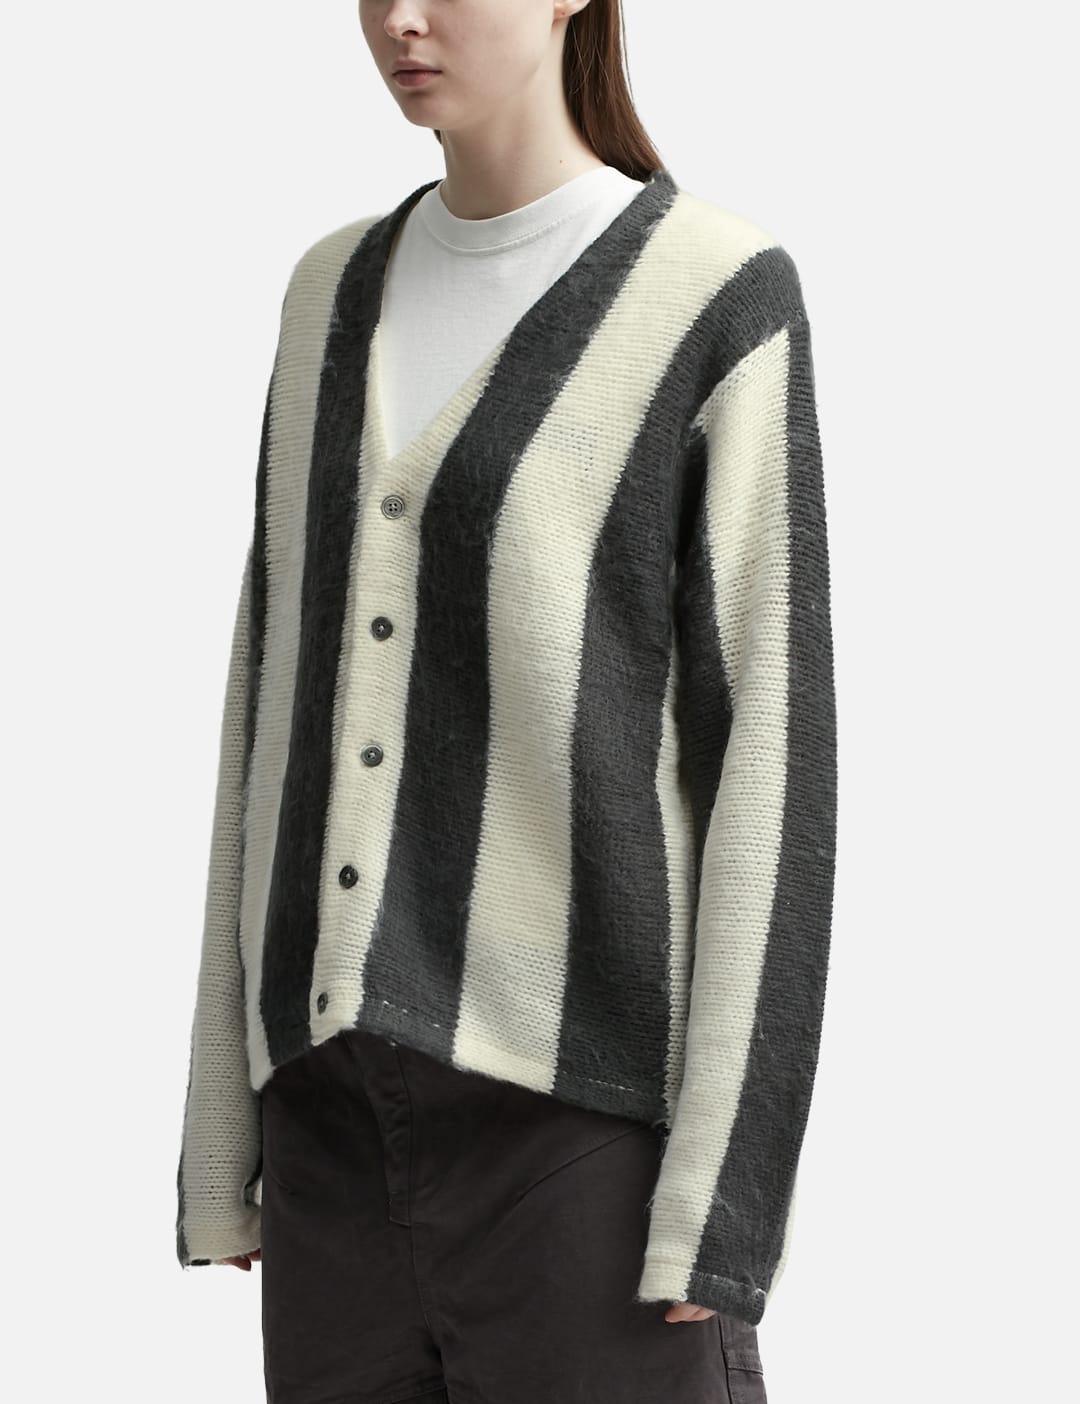 Stüssy - Stripe Brushed Cardigan | HBX - Globally Curated Fashion